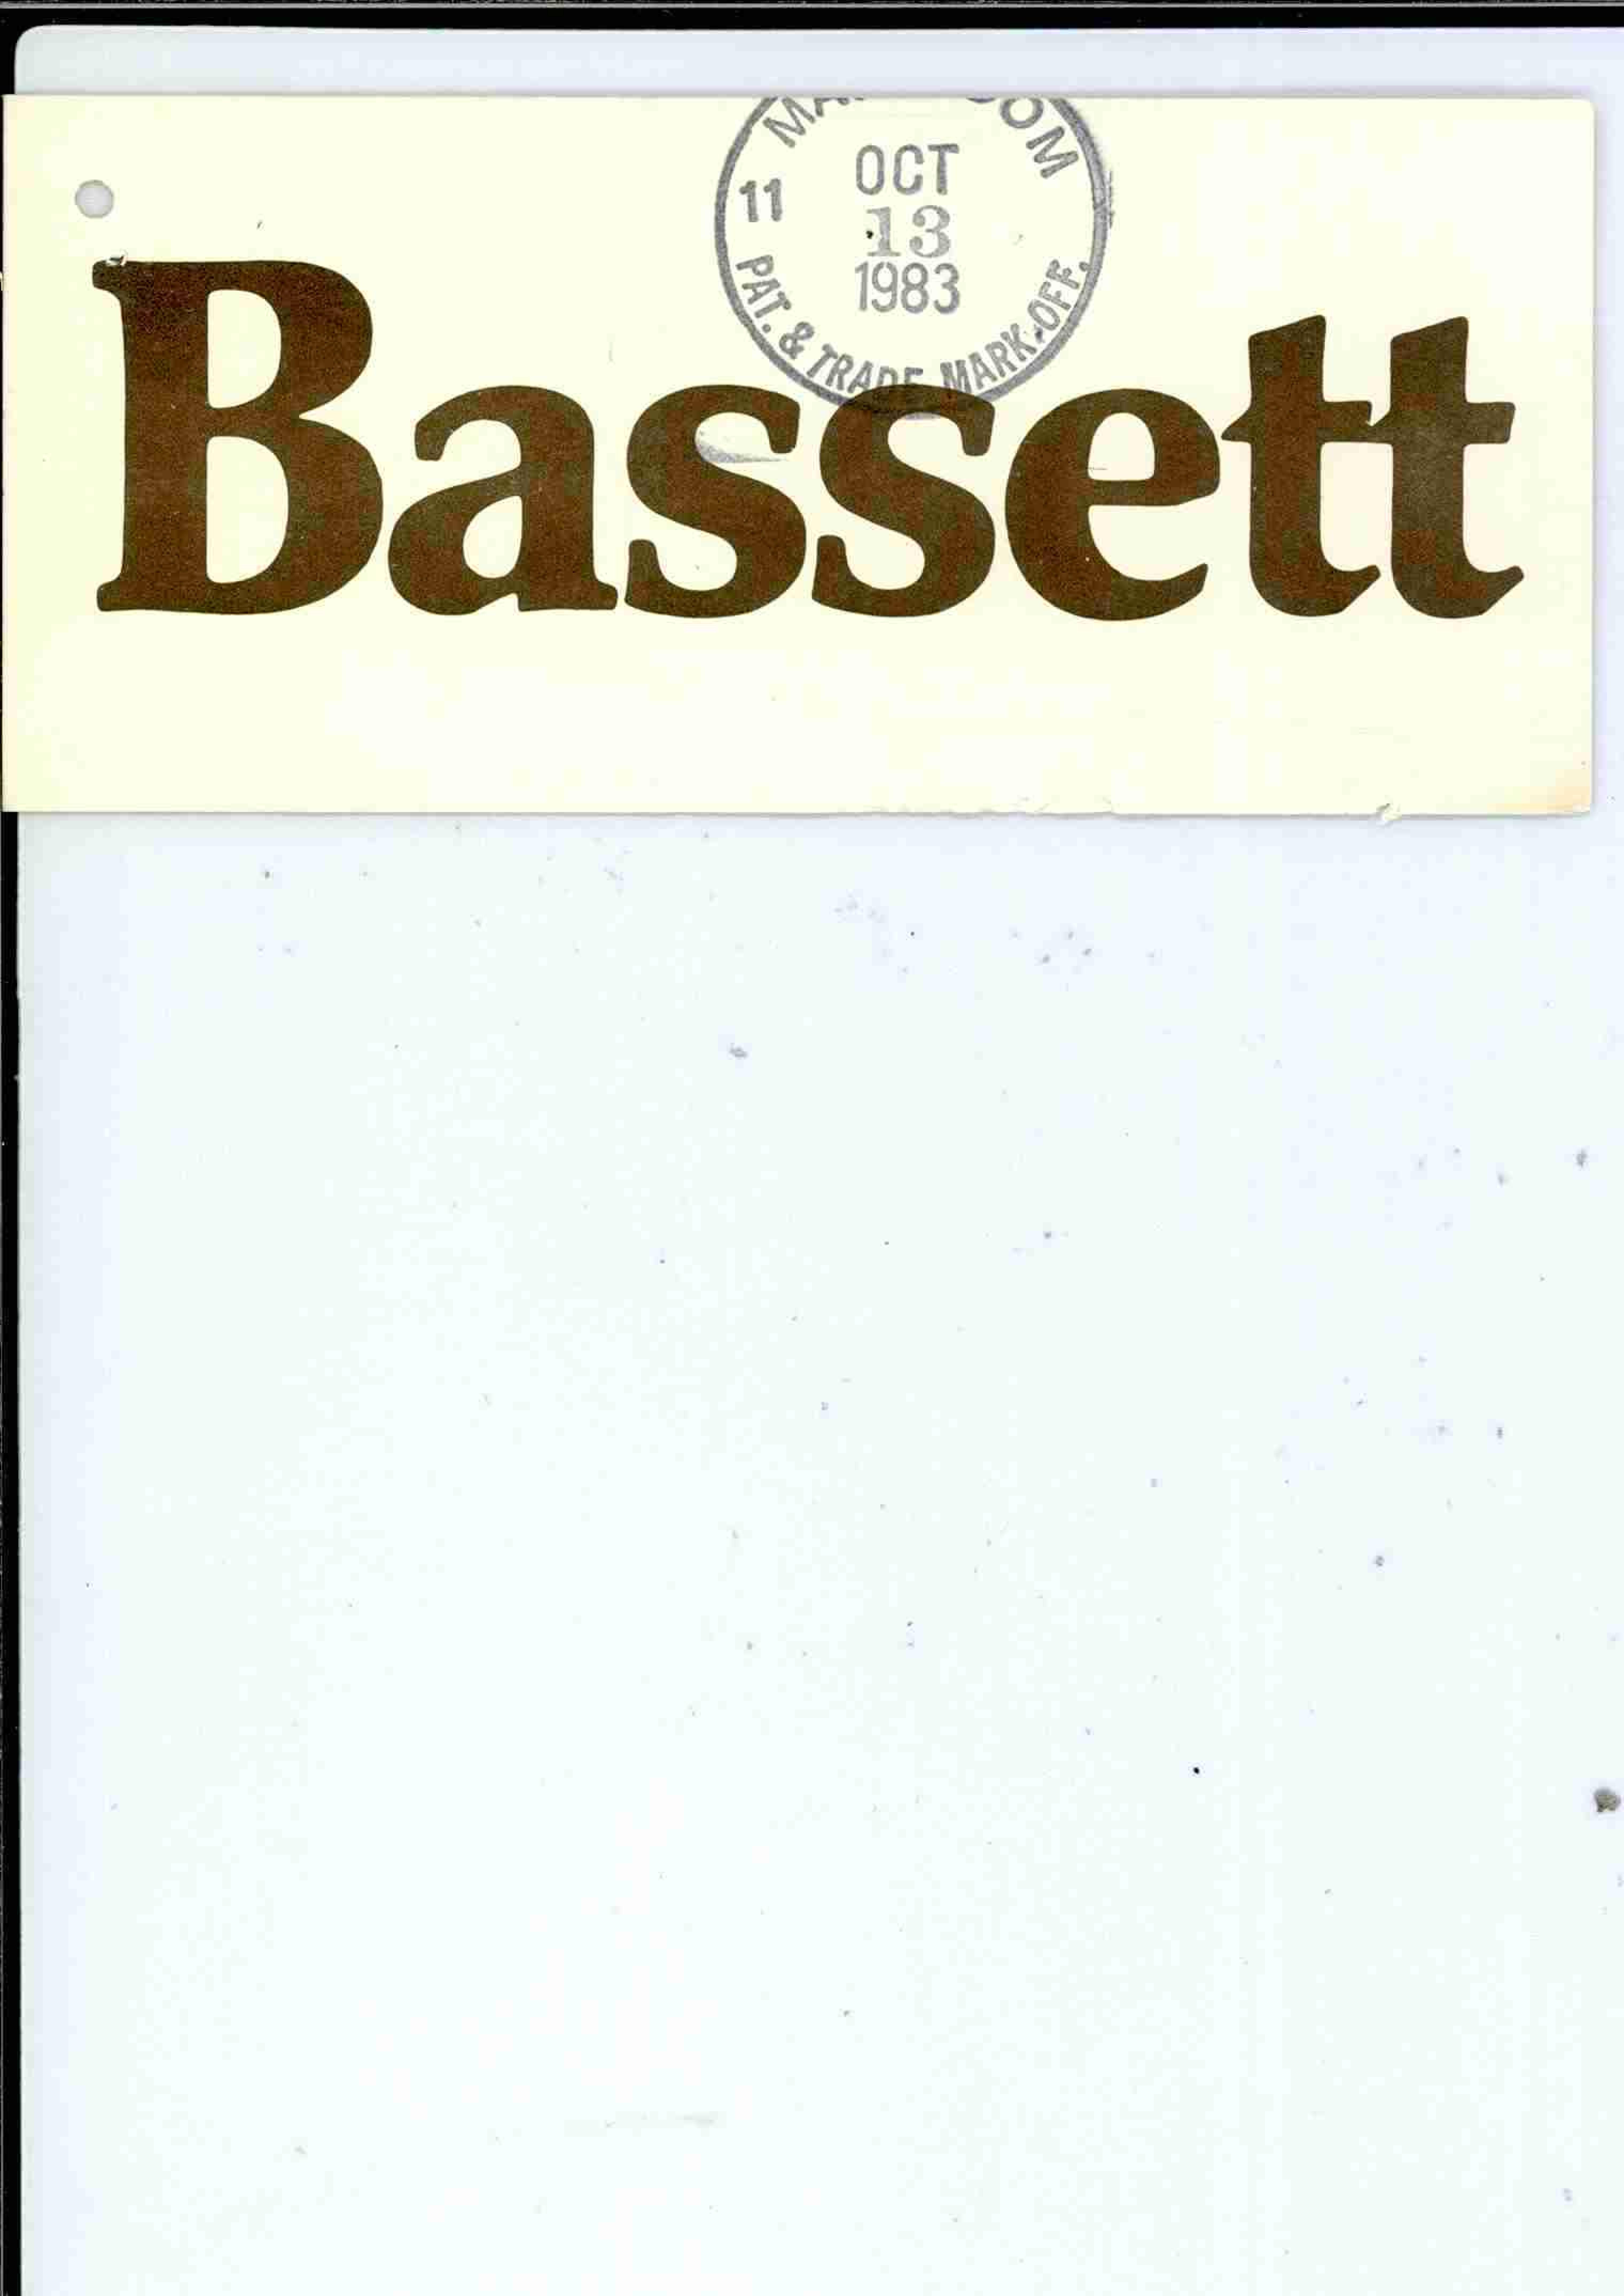 BASSETT